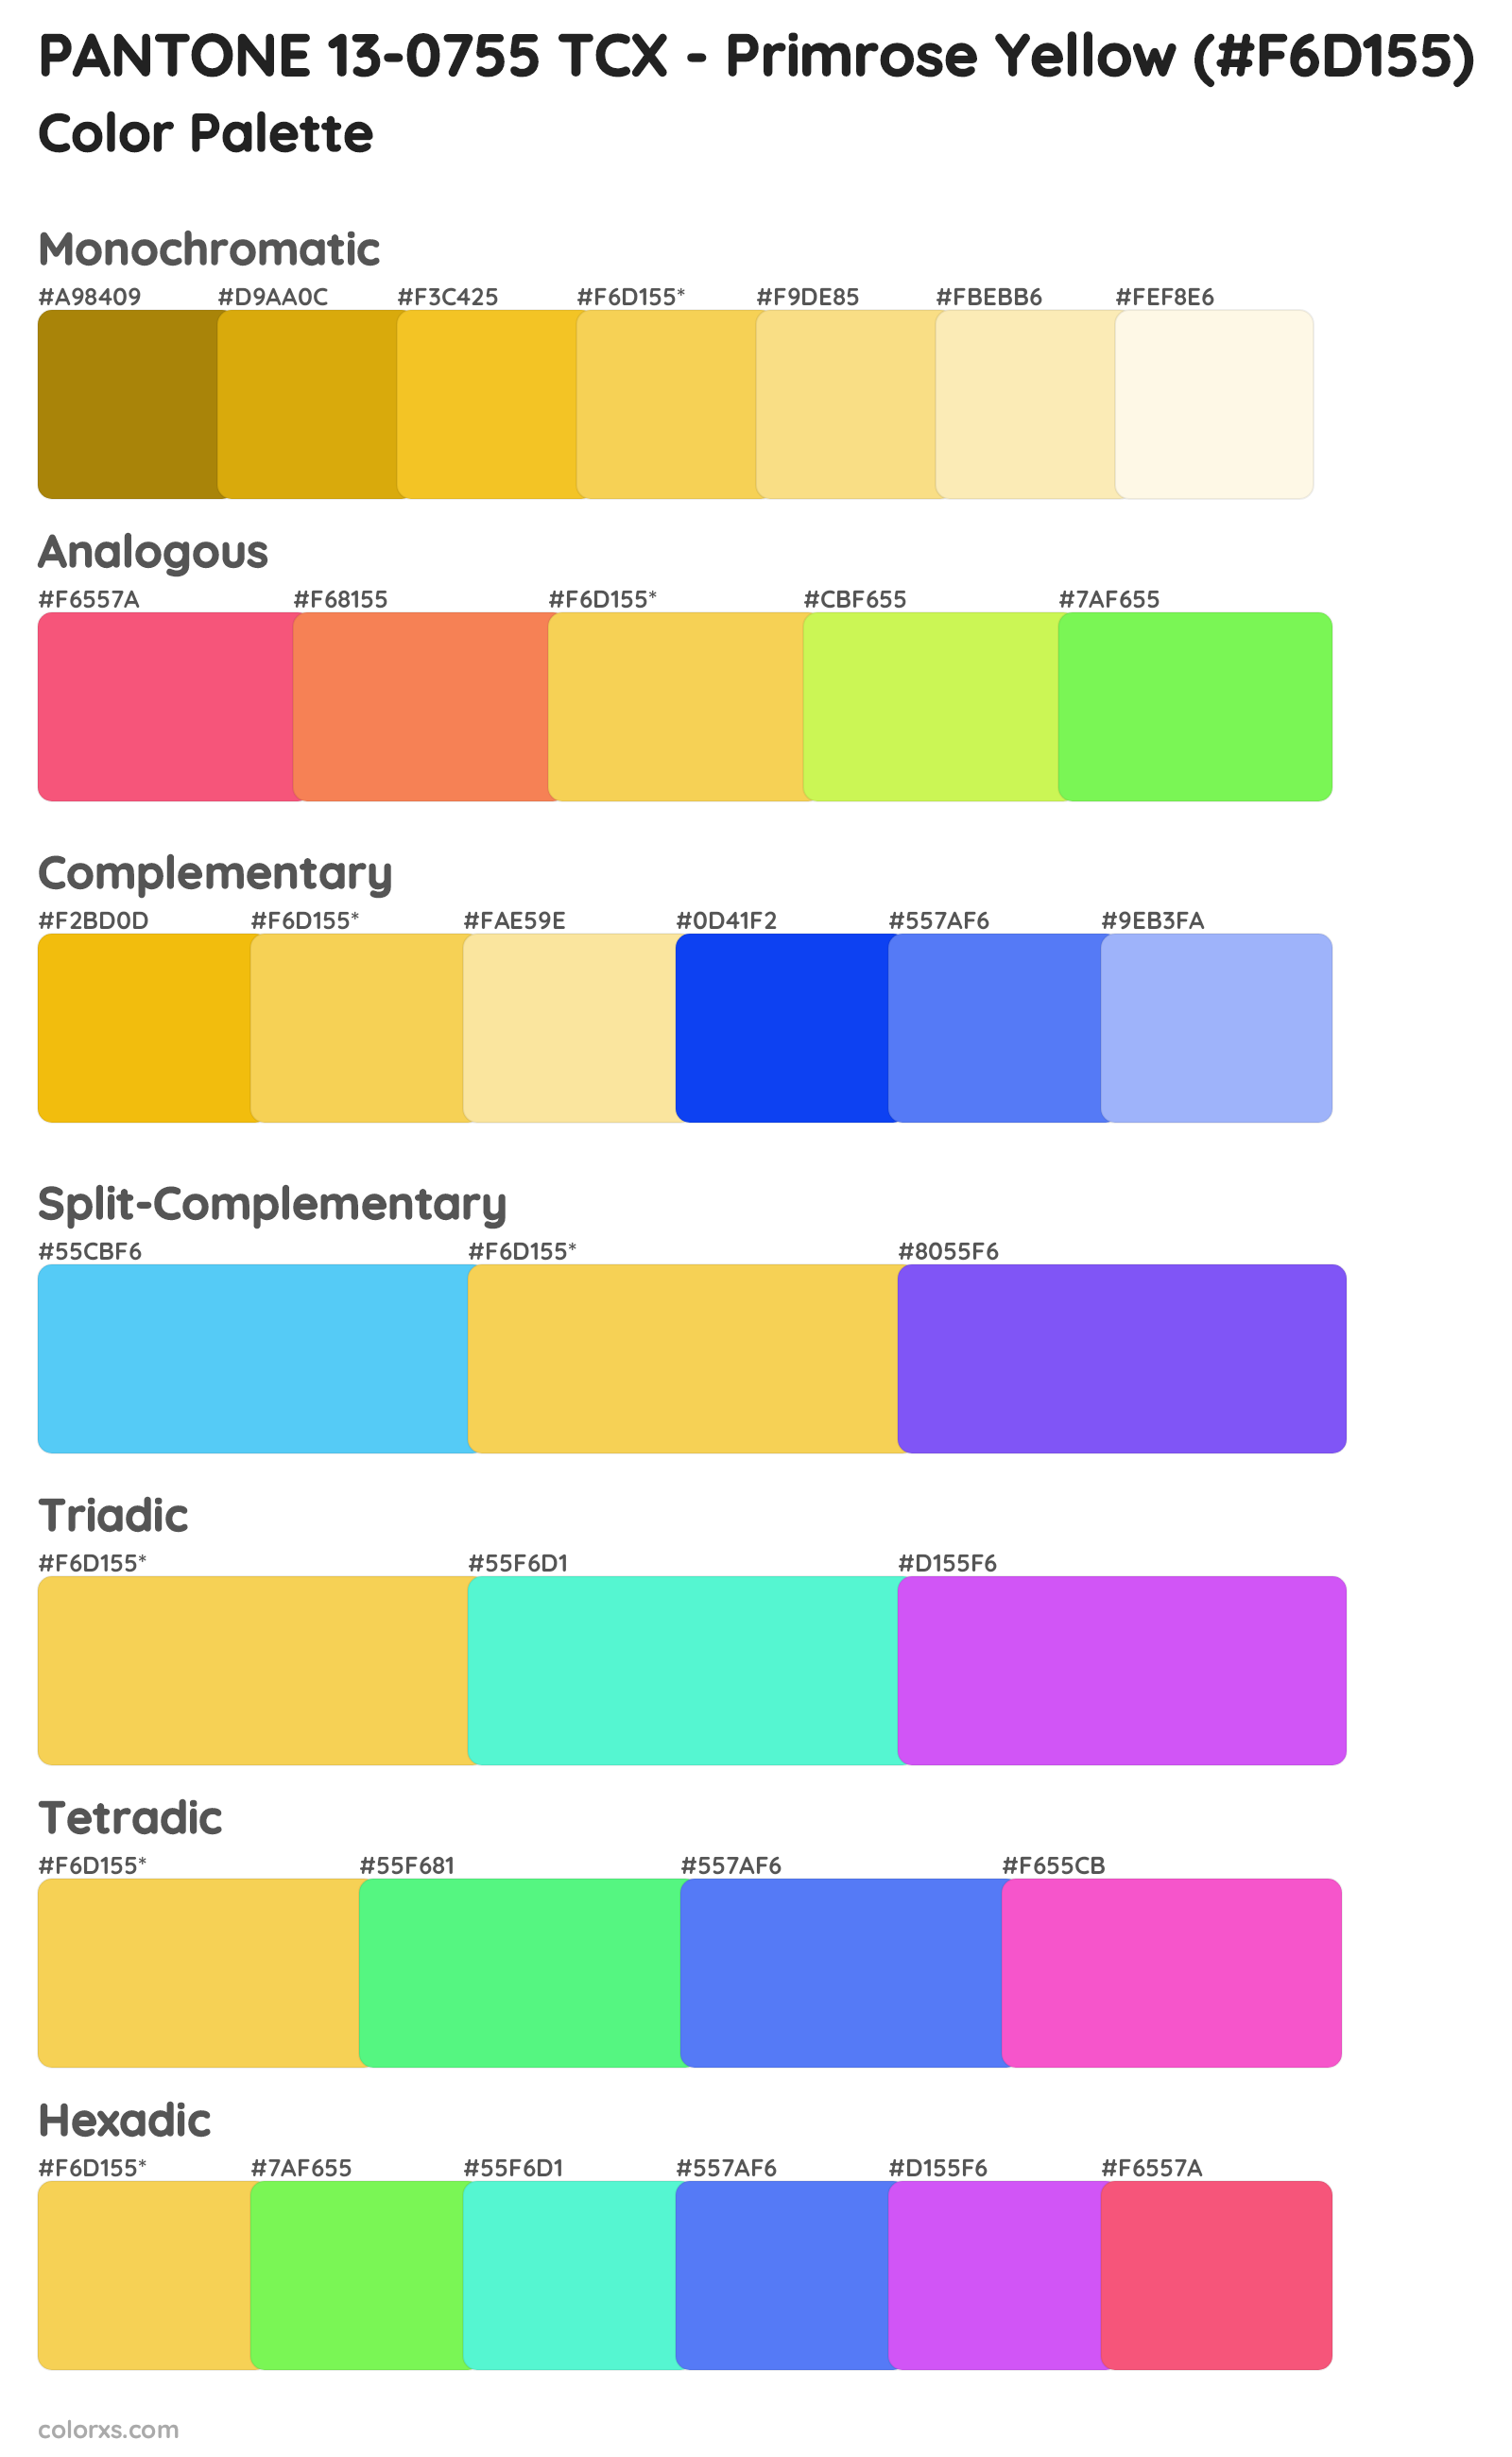 PANTONE 13-0755 TCX - Primrose Yellow Color Scheme Palettes